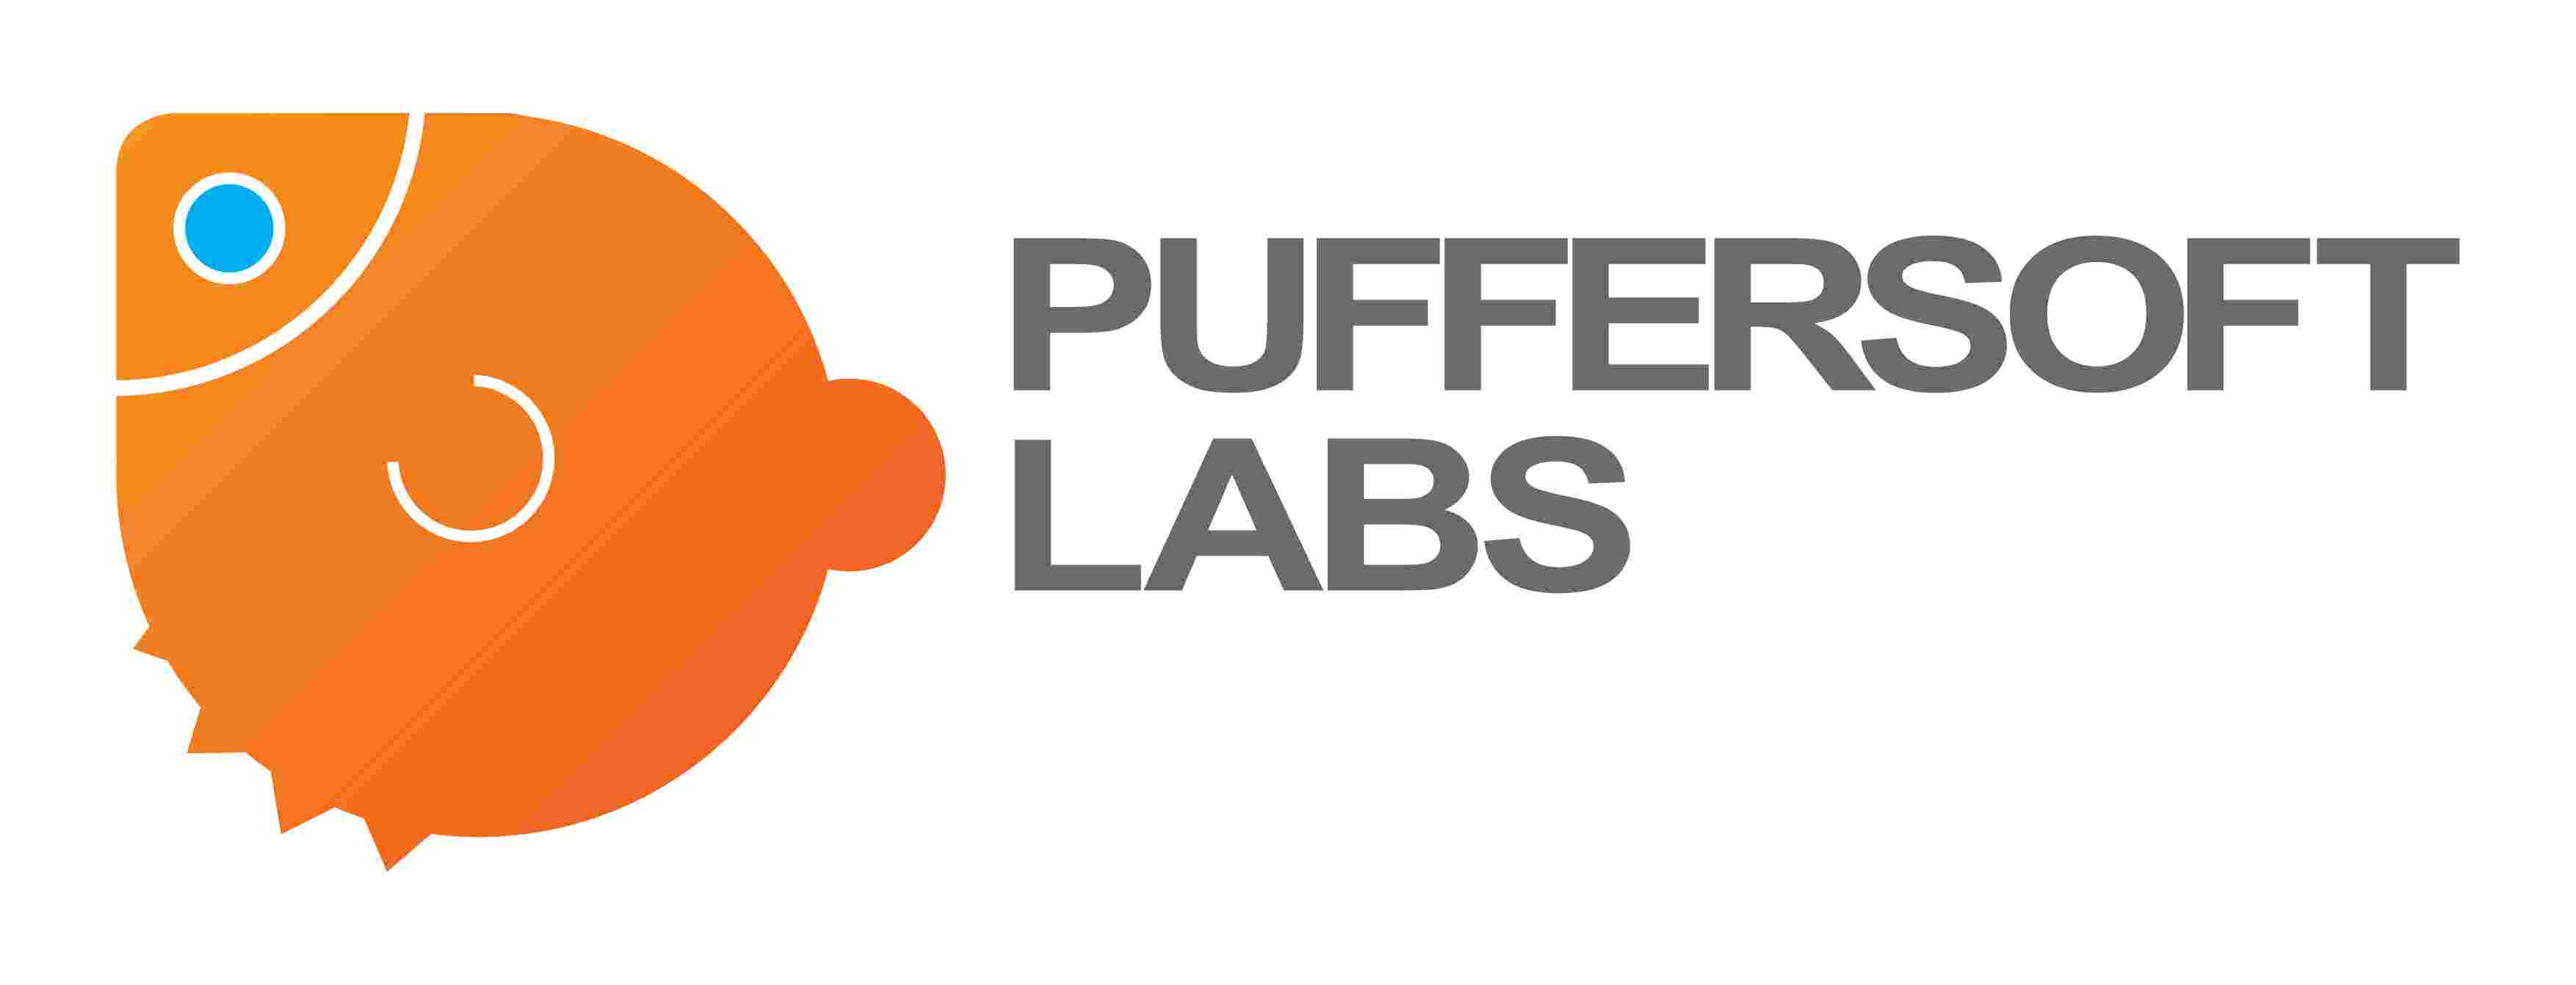 Puffersoft Labs